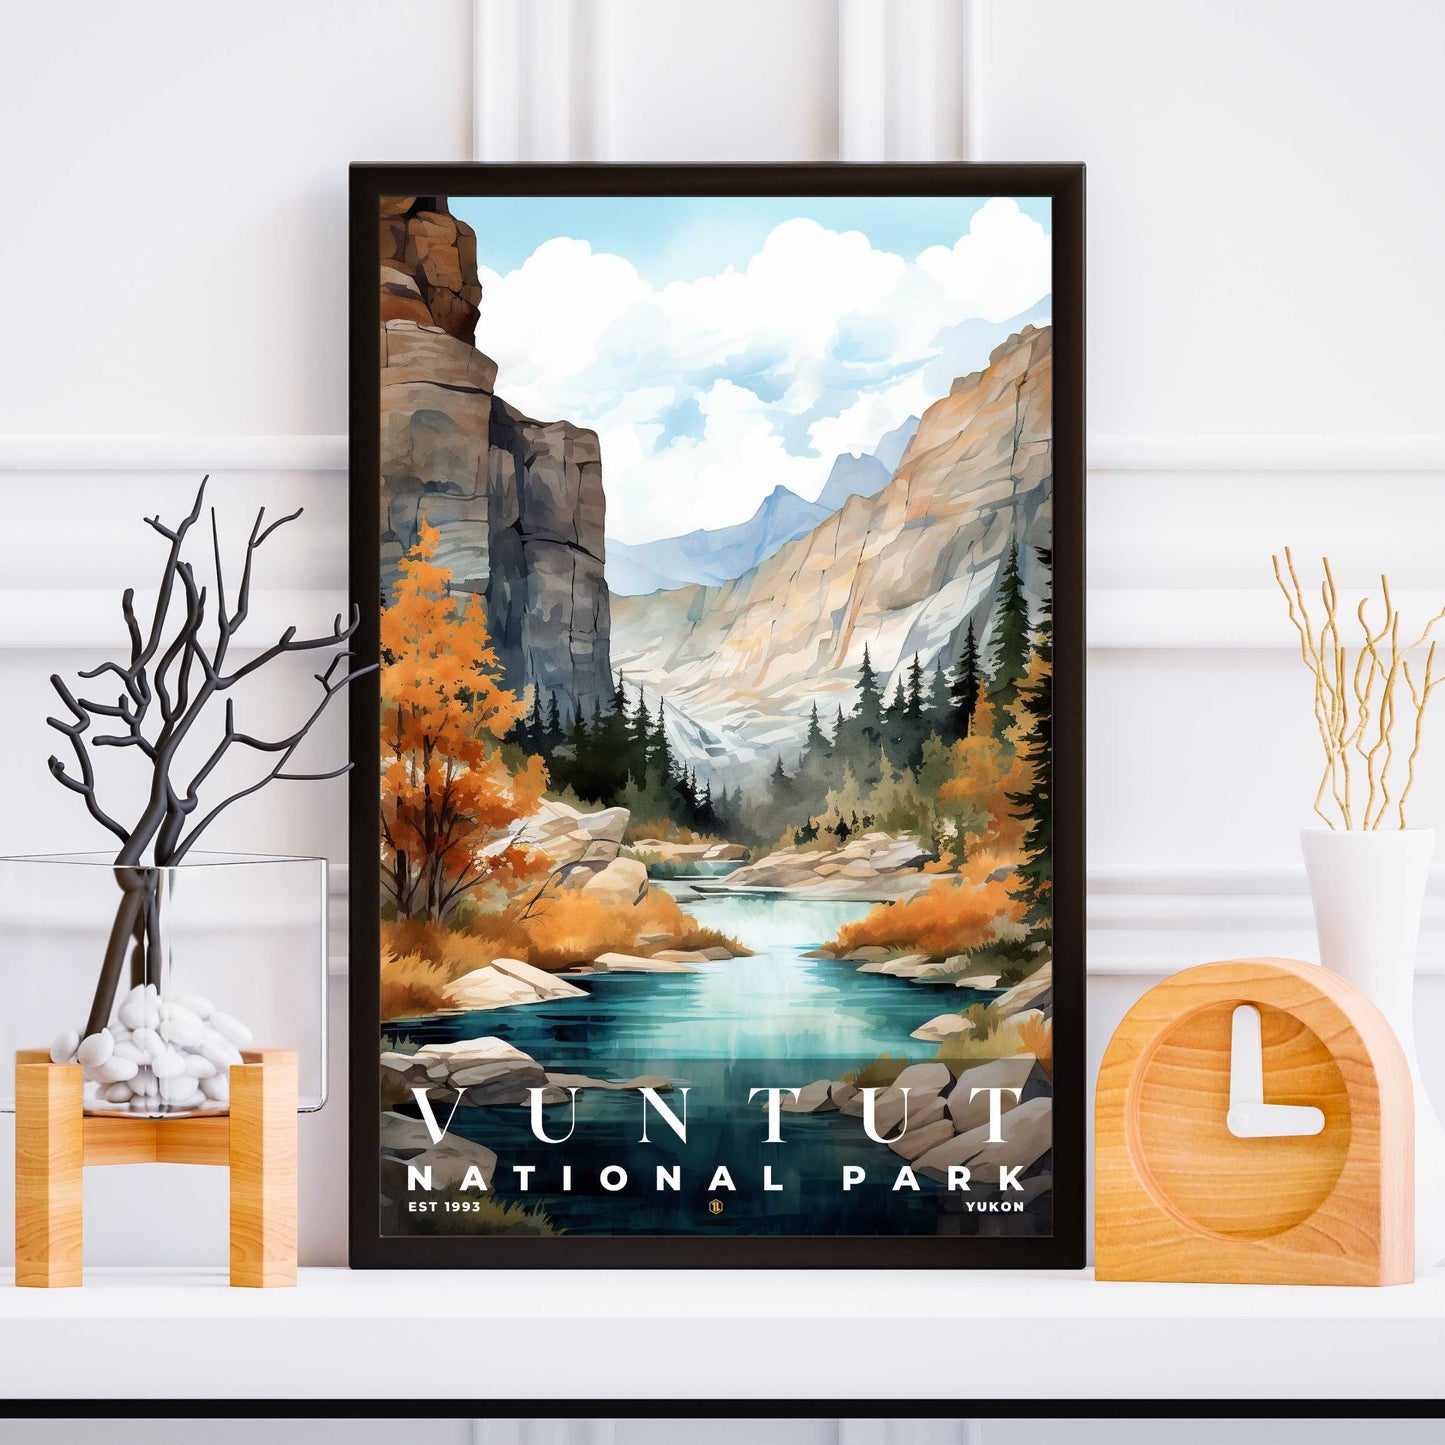 Vuntut National Park Poster | S08